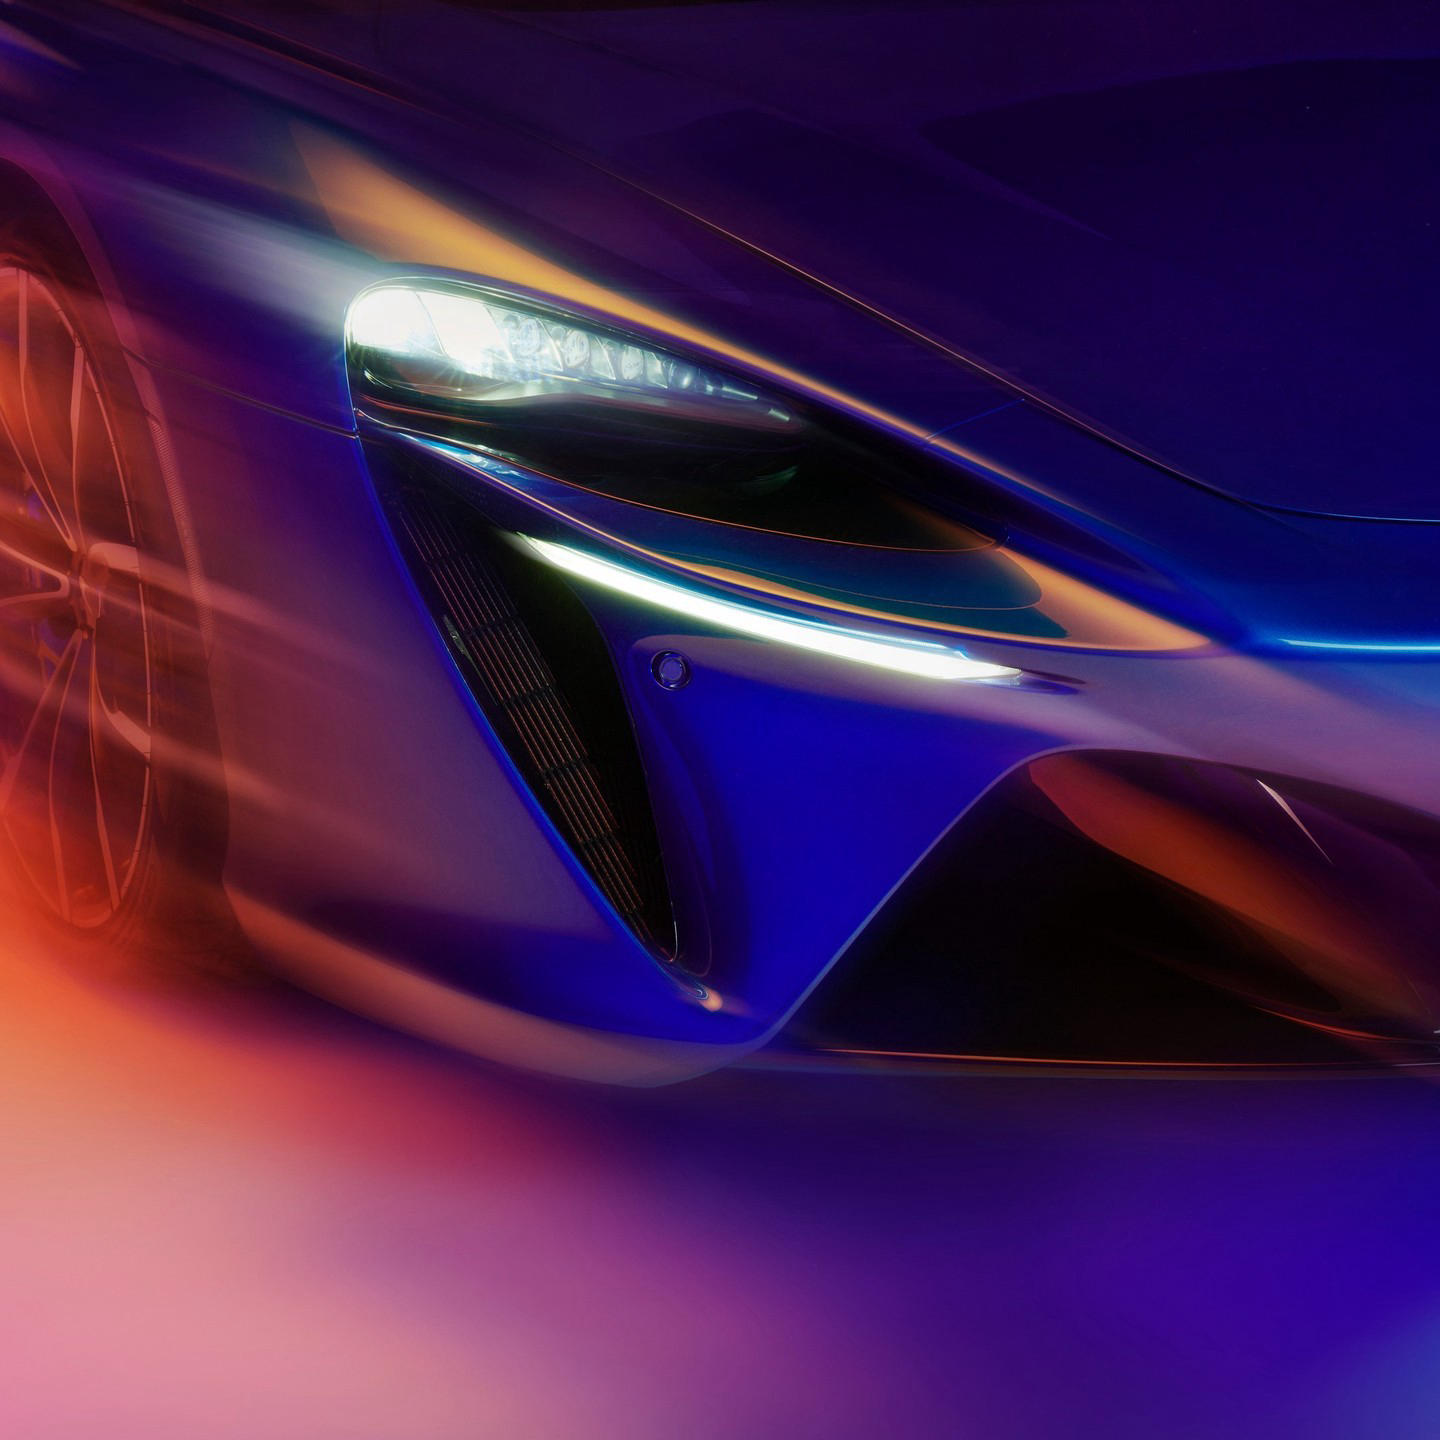 McLaren Automotive - The next generation supercar